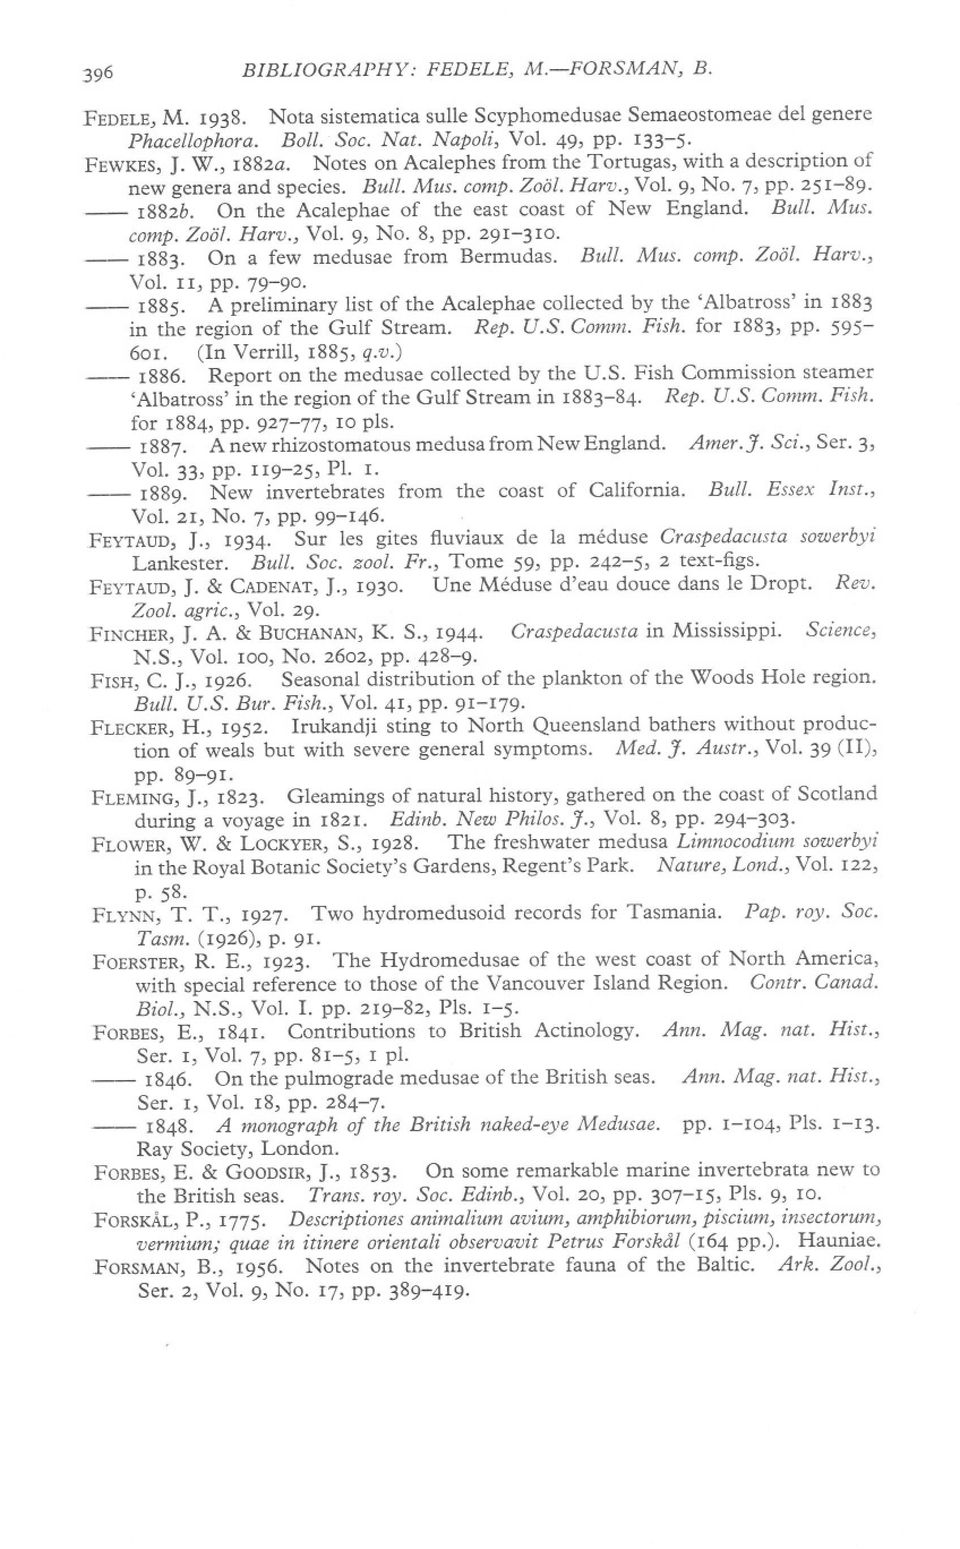 Bull. Mus. compozool. Harv., Vol. 9, No.8, pp. 291-310. - 1883. On a few medusae from Bermudas. Bull. Mus. compo Zool. Harv., Vol. II, pp. 79-9. - 1885.